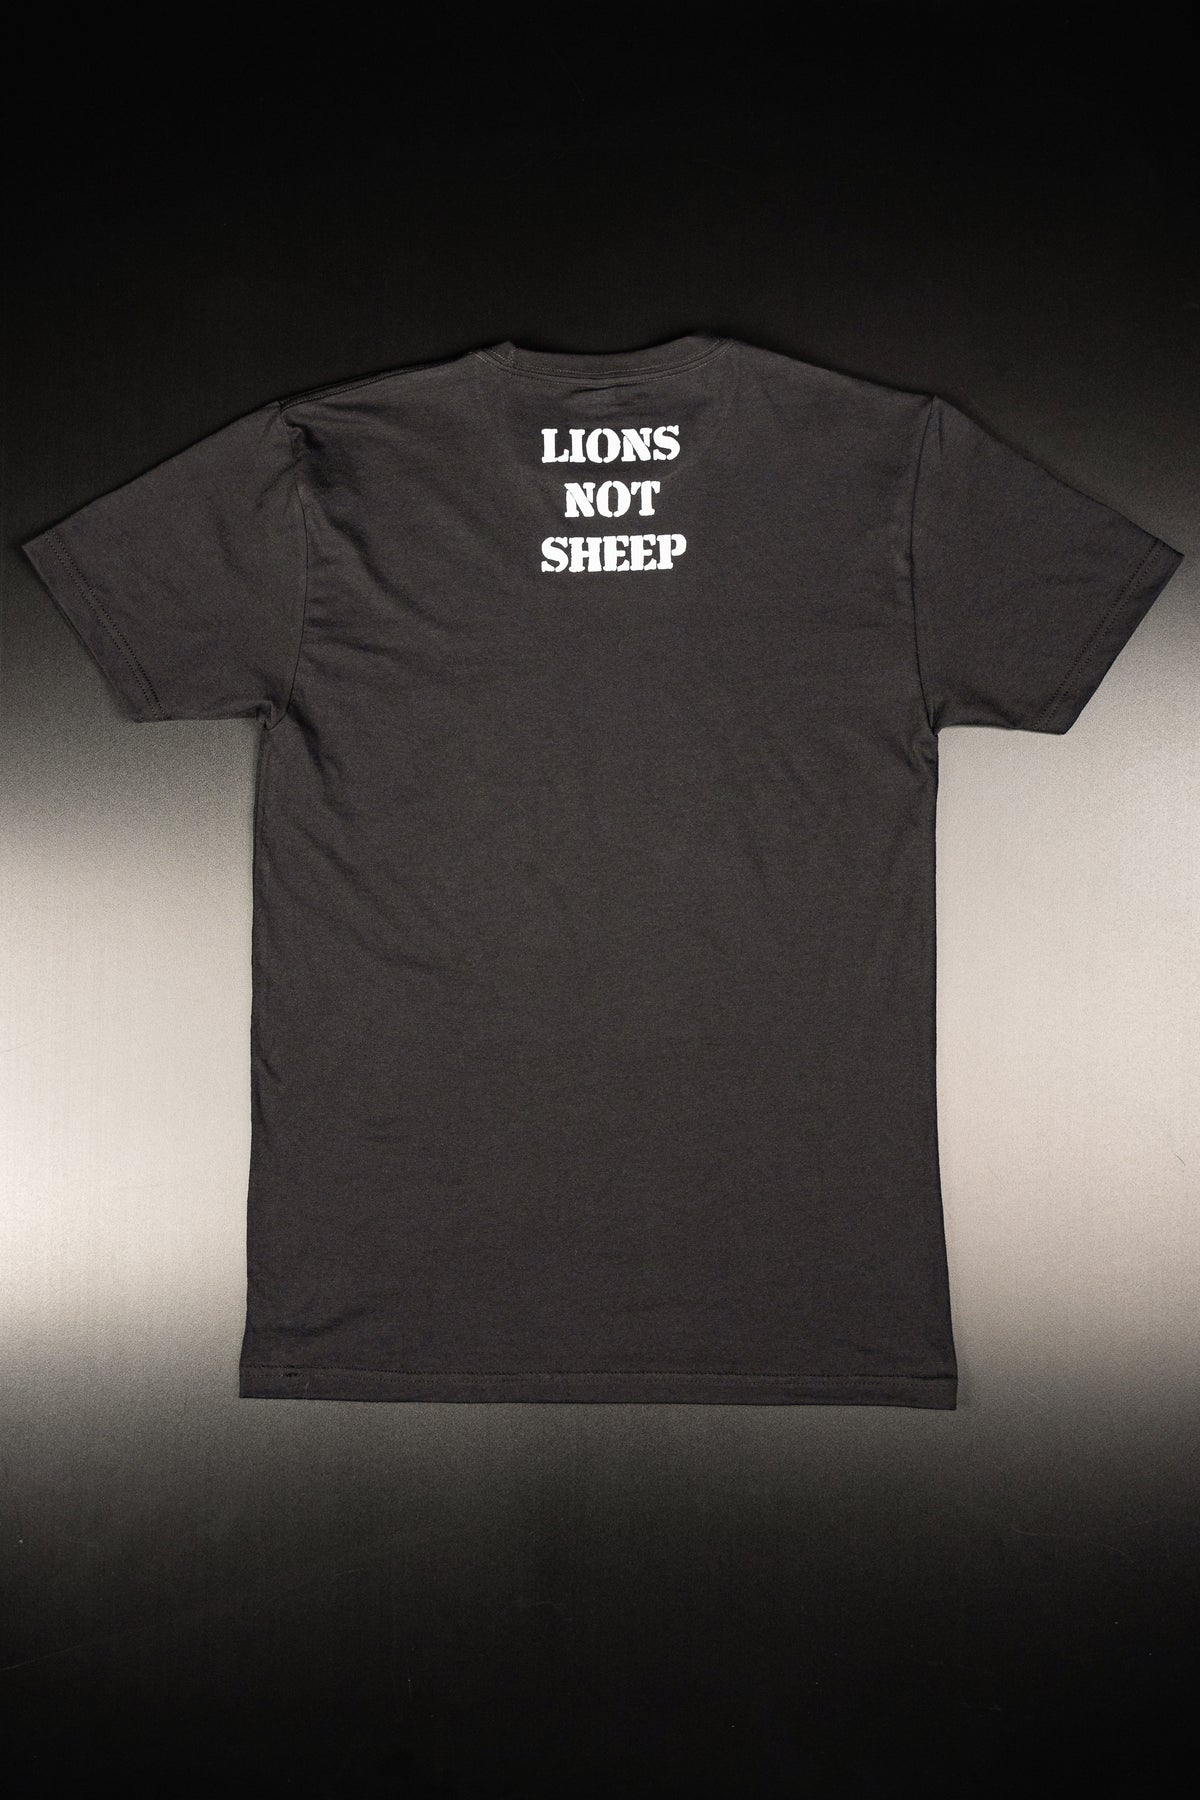 Lions Not Sheep “Cross” Tee - Lions Not Sheep ®